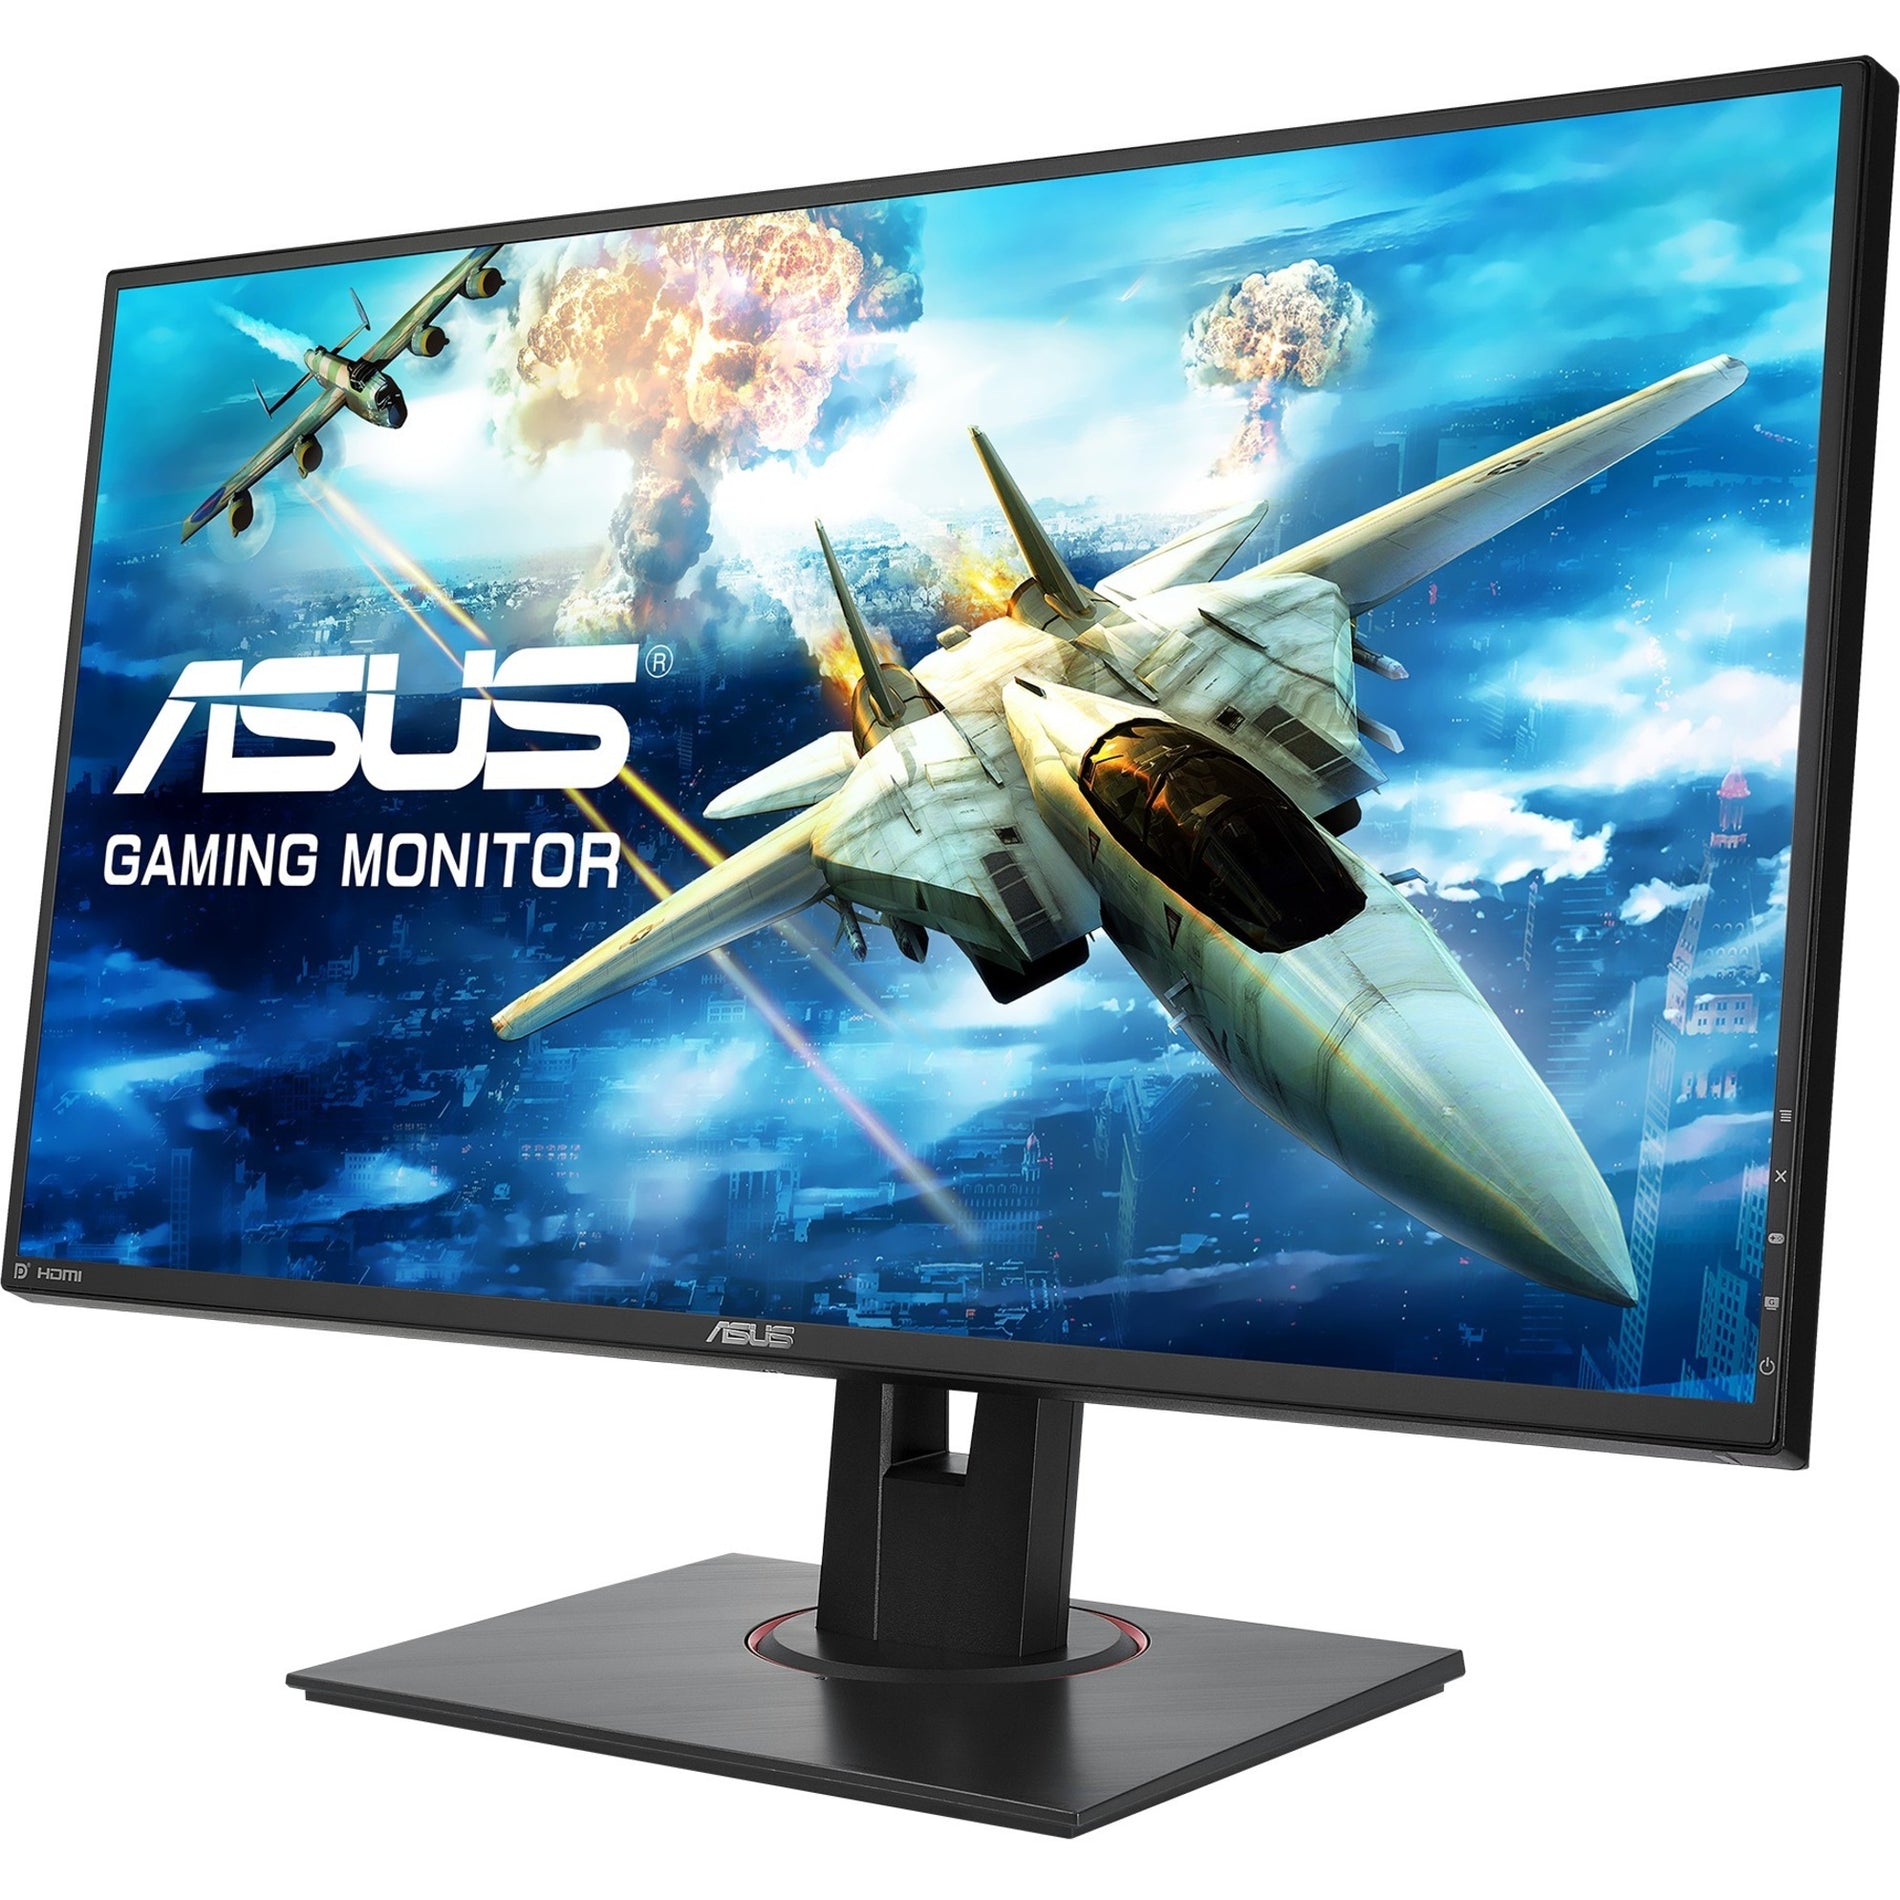 Asus VG278QR Gaming LCD Monitor 27", Full HD, G-sync Compatible, 400 Nit Brightness, 72% NTSC Color Gamut